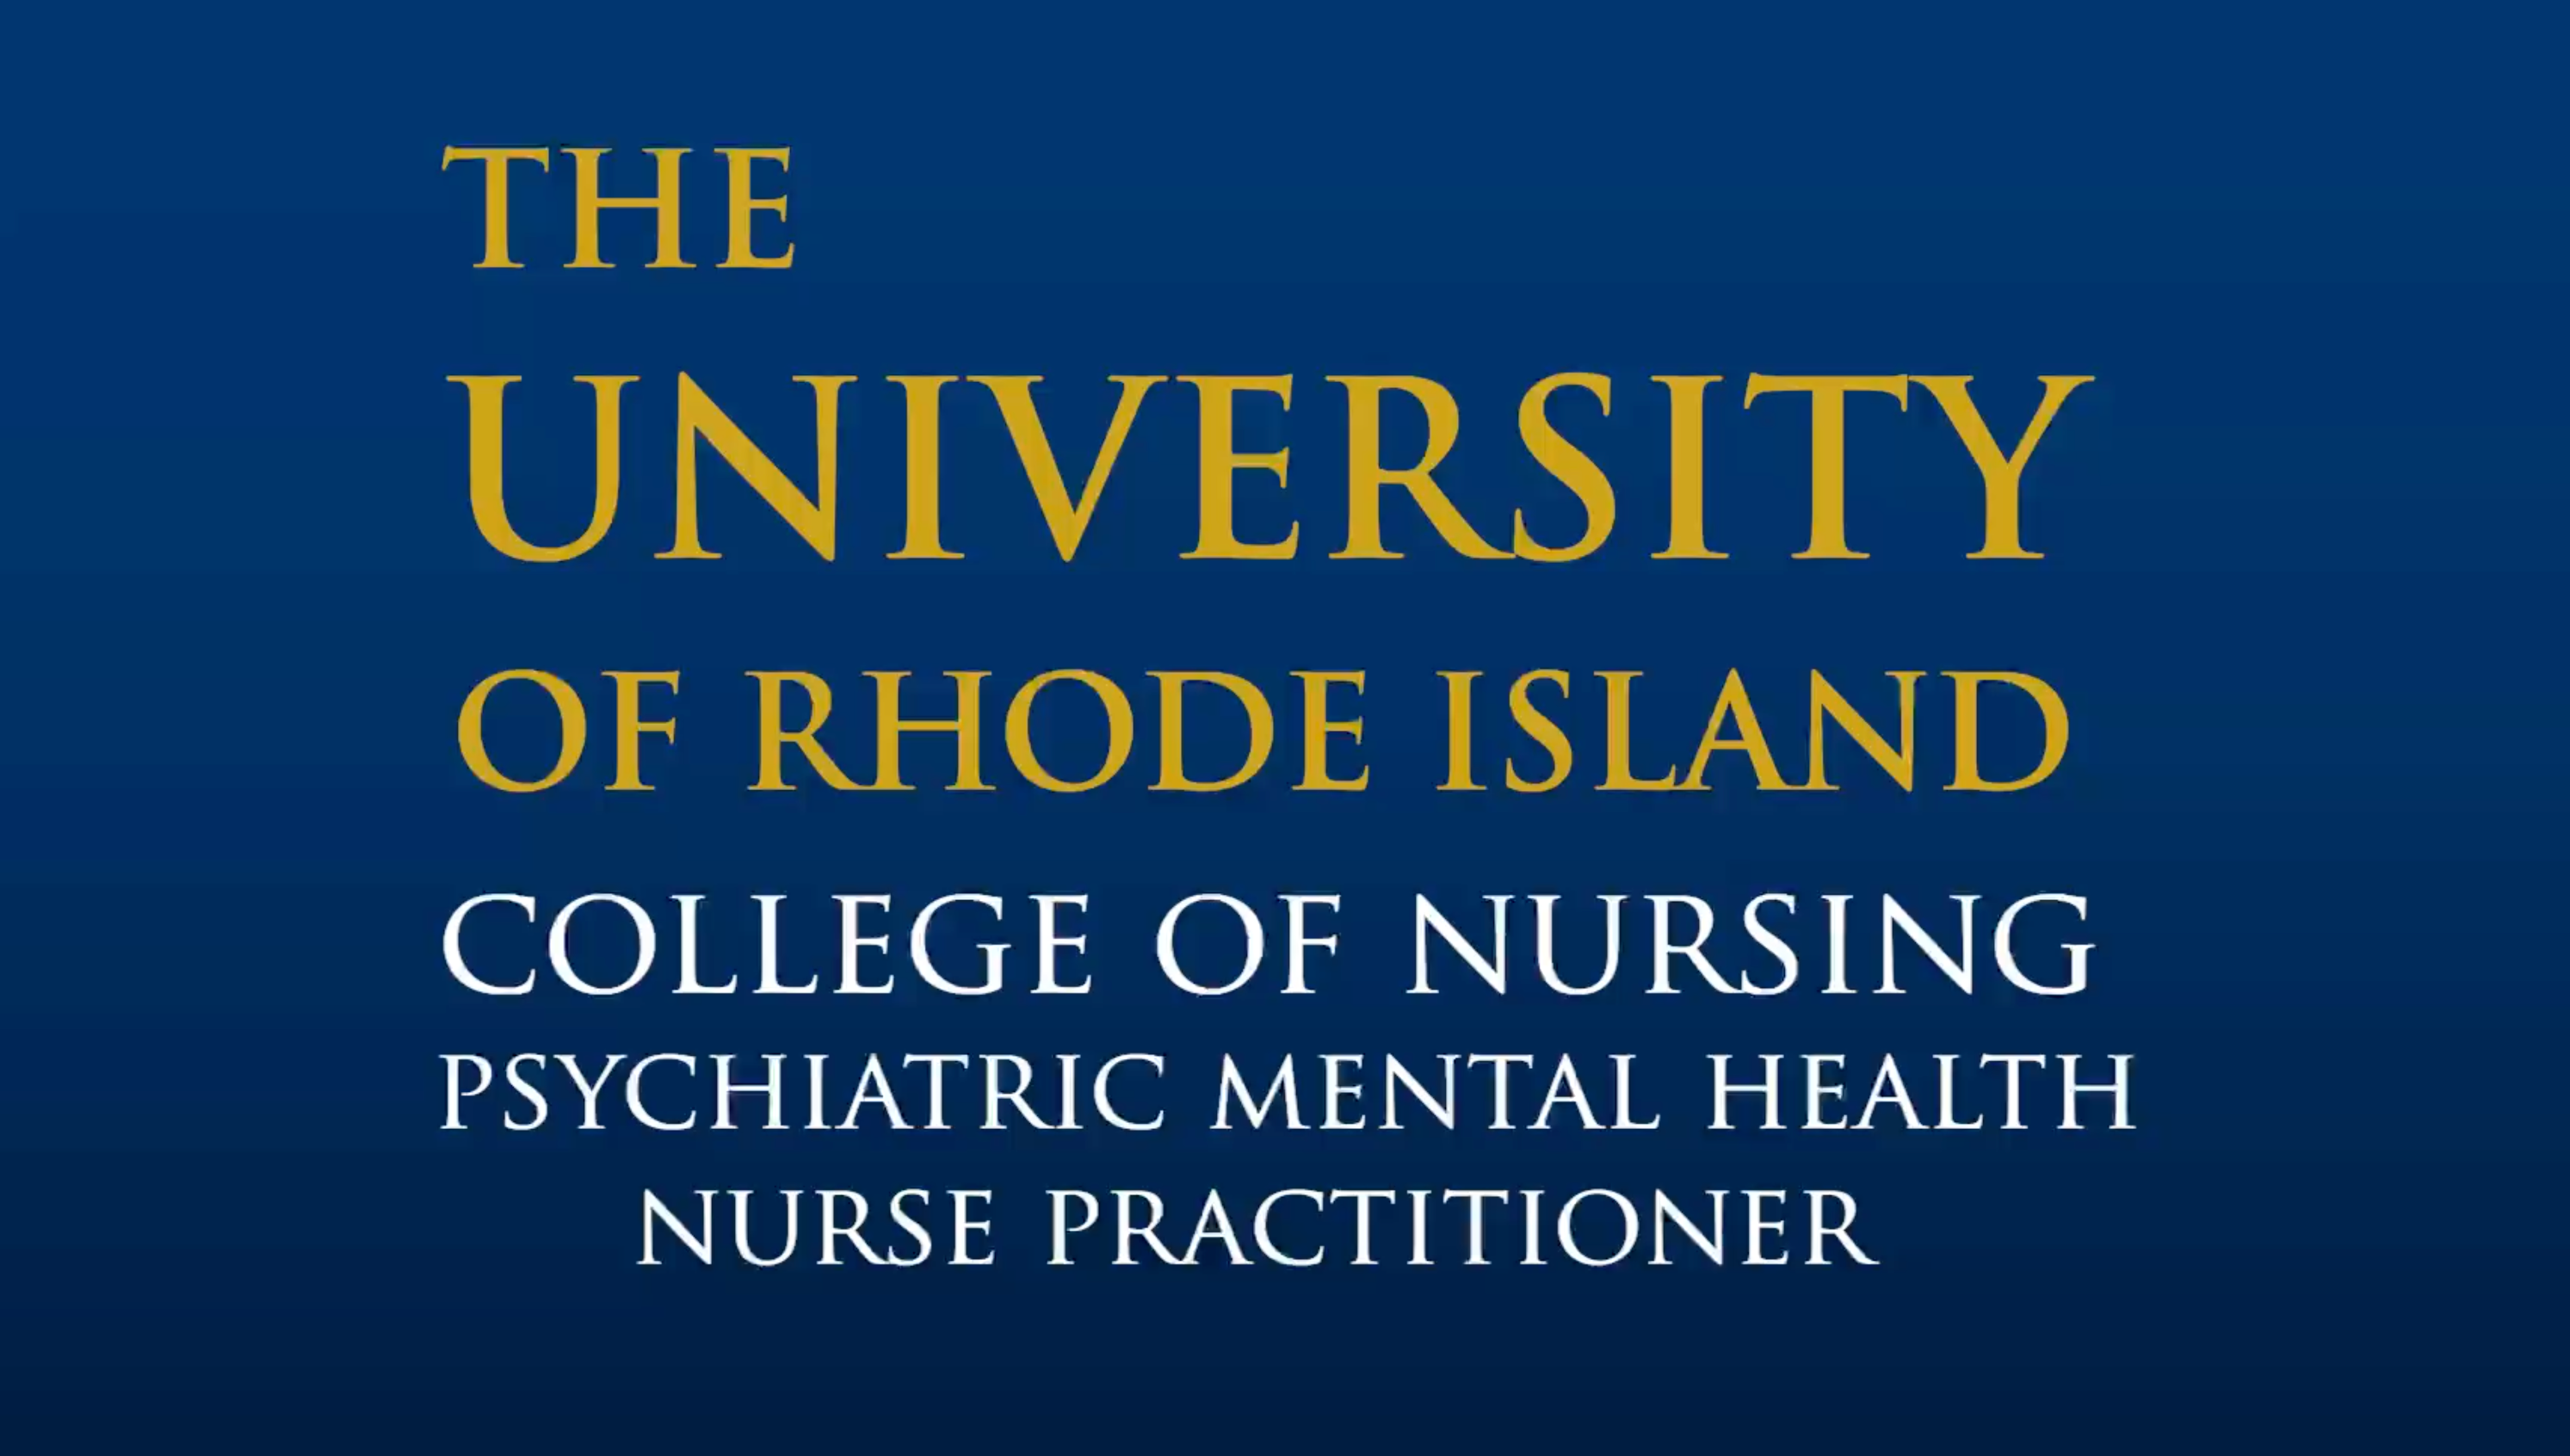 Psychiatric Mental Health Nurse Practitioner